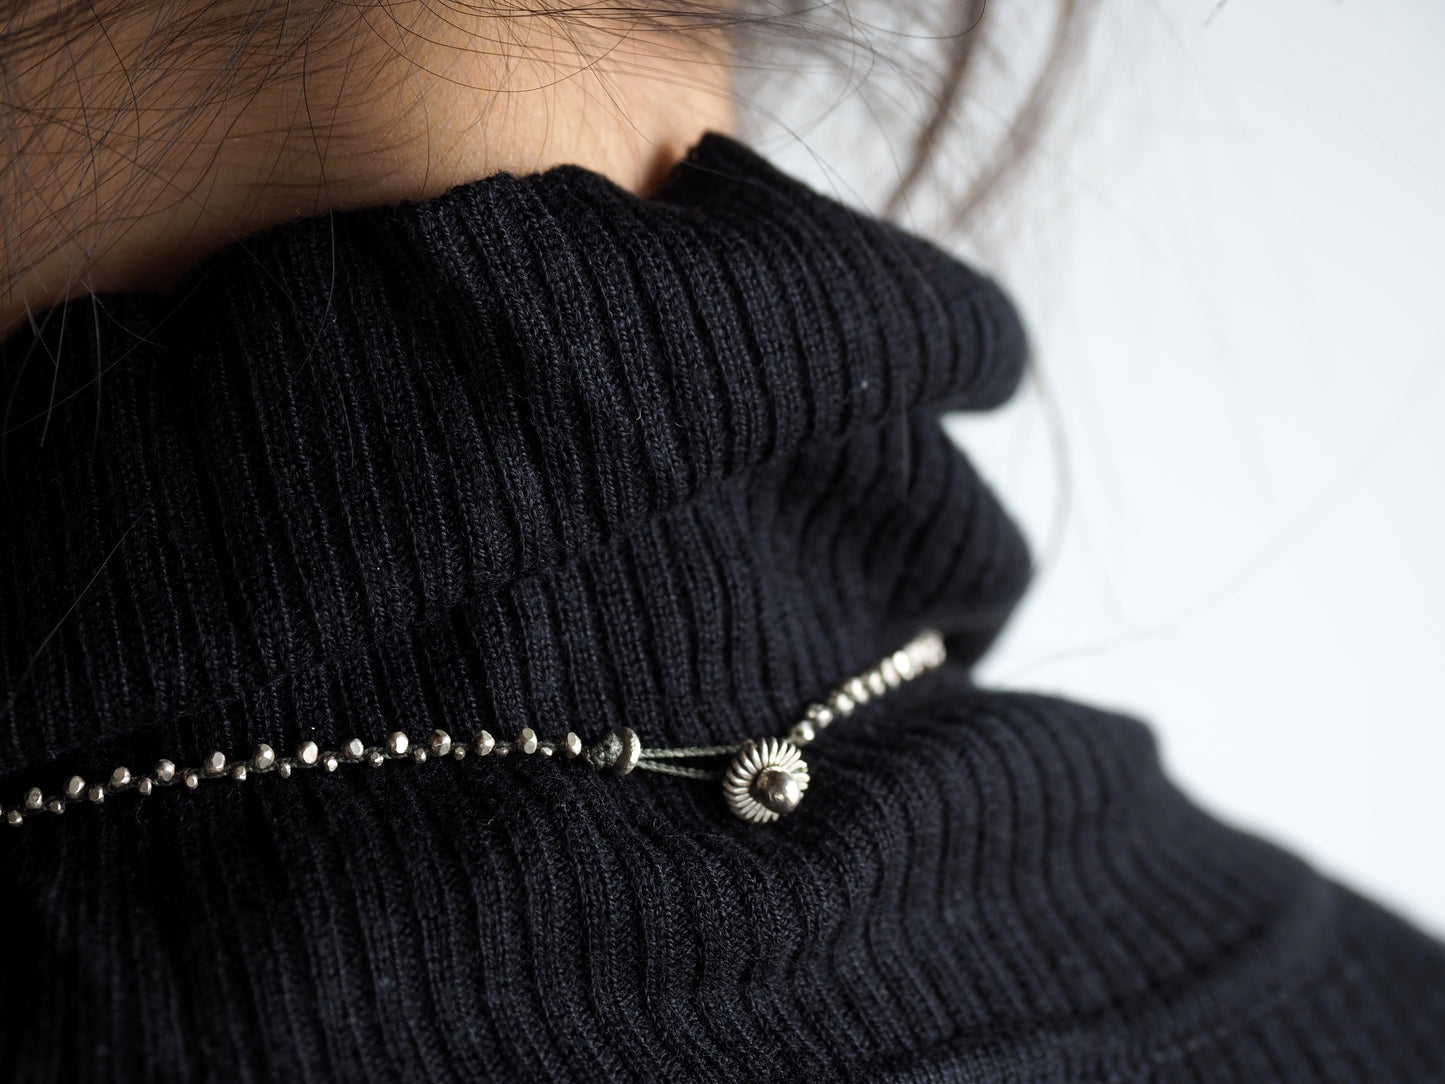 Silver braid pendant "straw knitting"